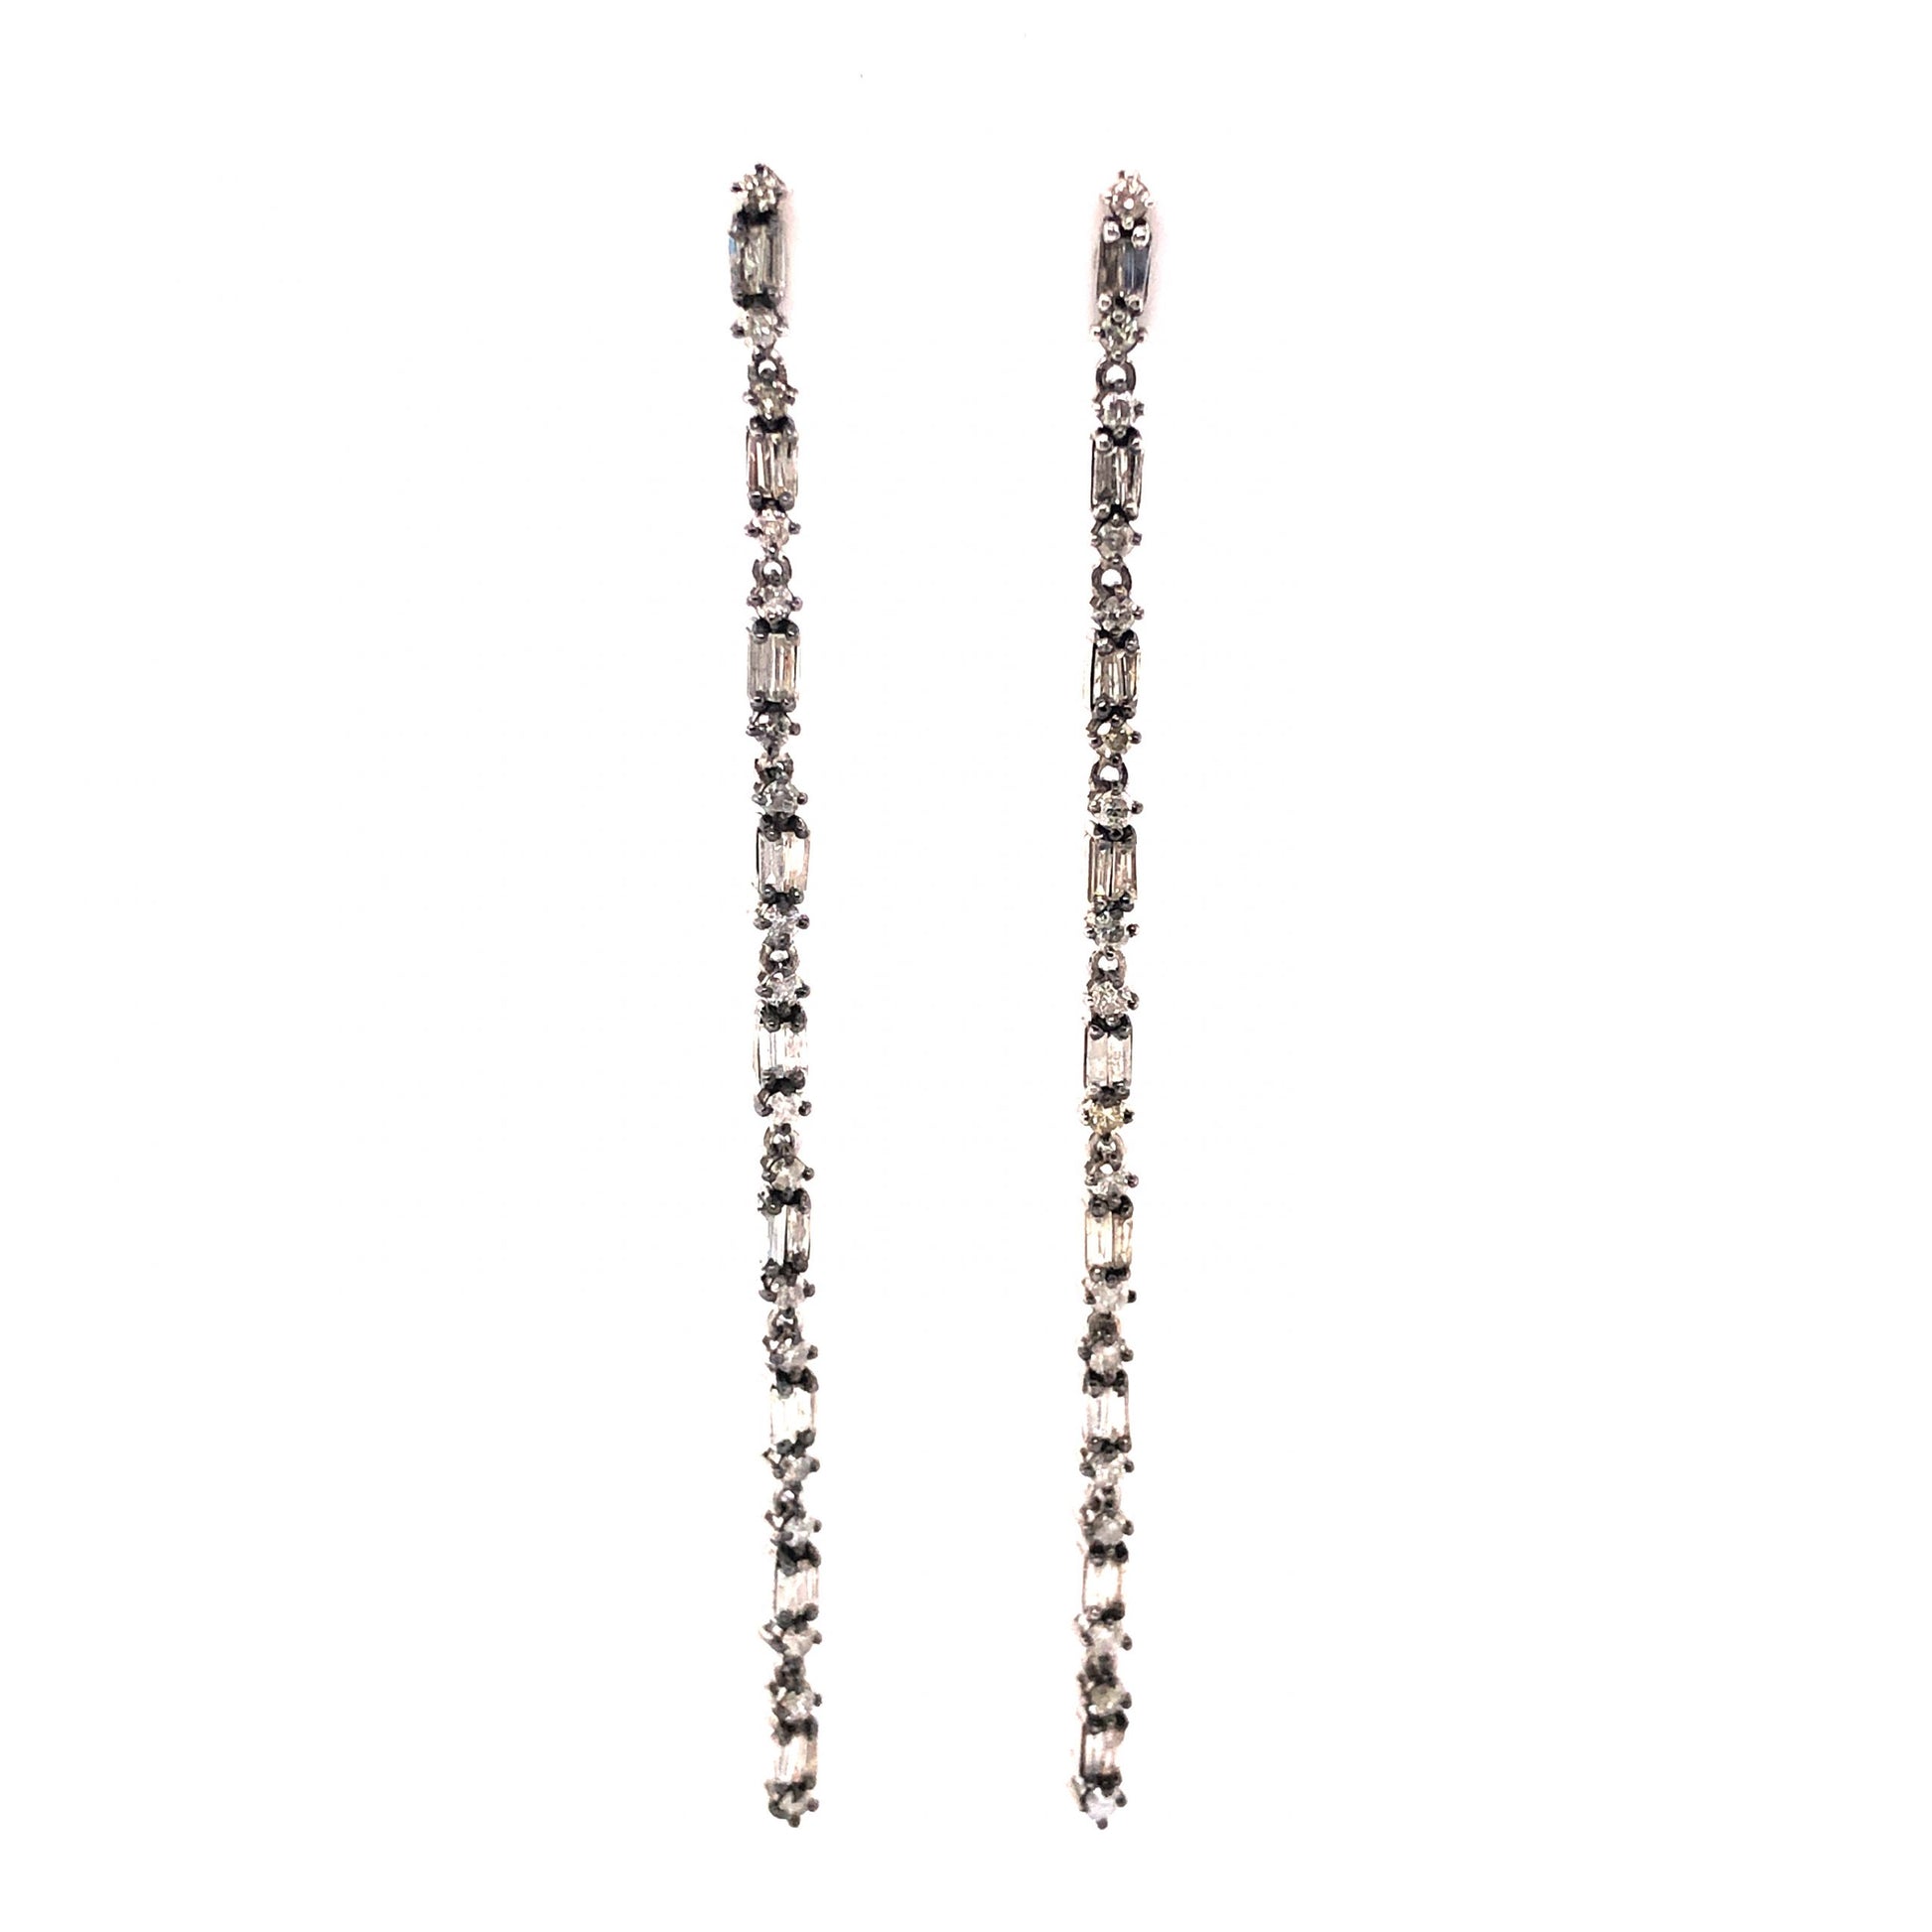 Baguette Cut Diamond Drop Earrings in Sterling SilverComposition: PlatinumTotal Diamond Weight: 2.52 ctTotal Gram Weight: 5.6 gInscription: 14/20 GF